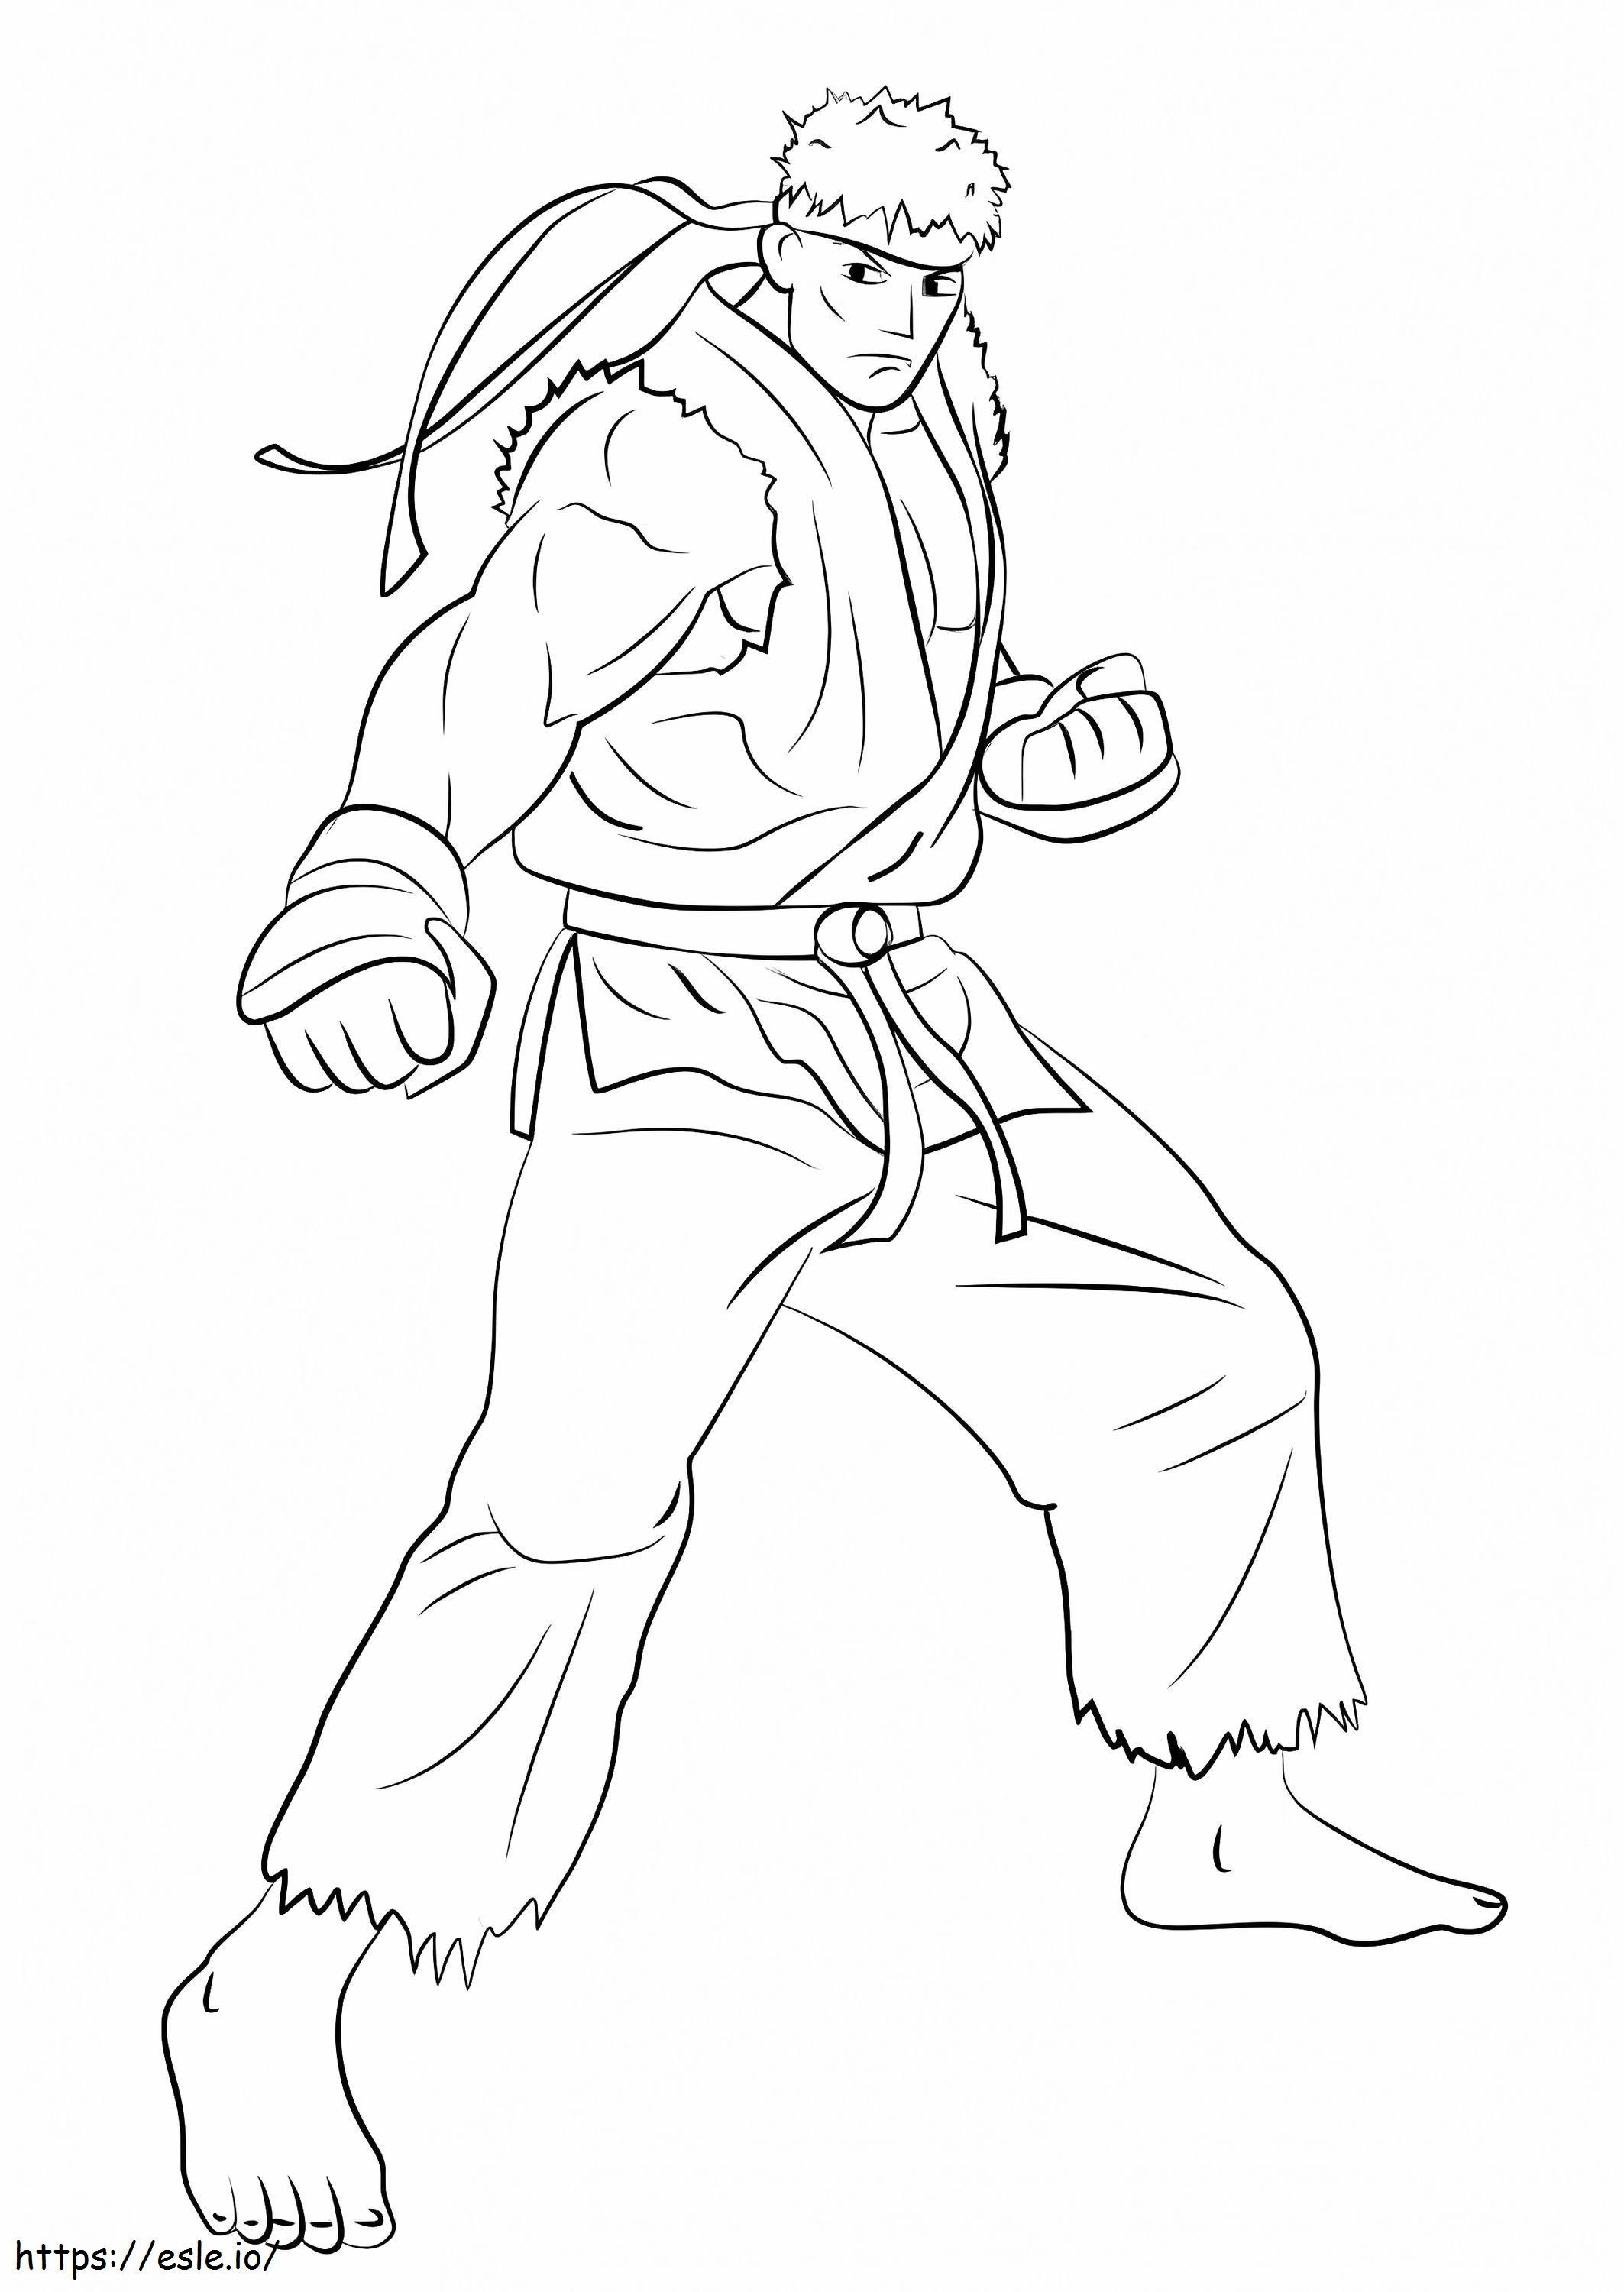 Ryu-Kämpfe ausmalbilder